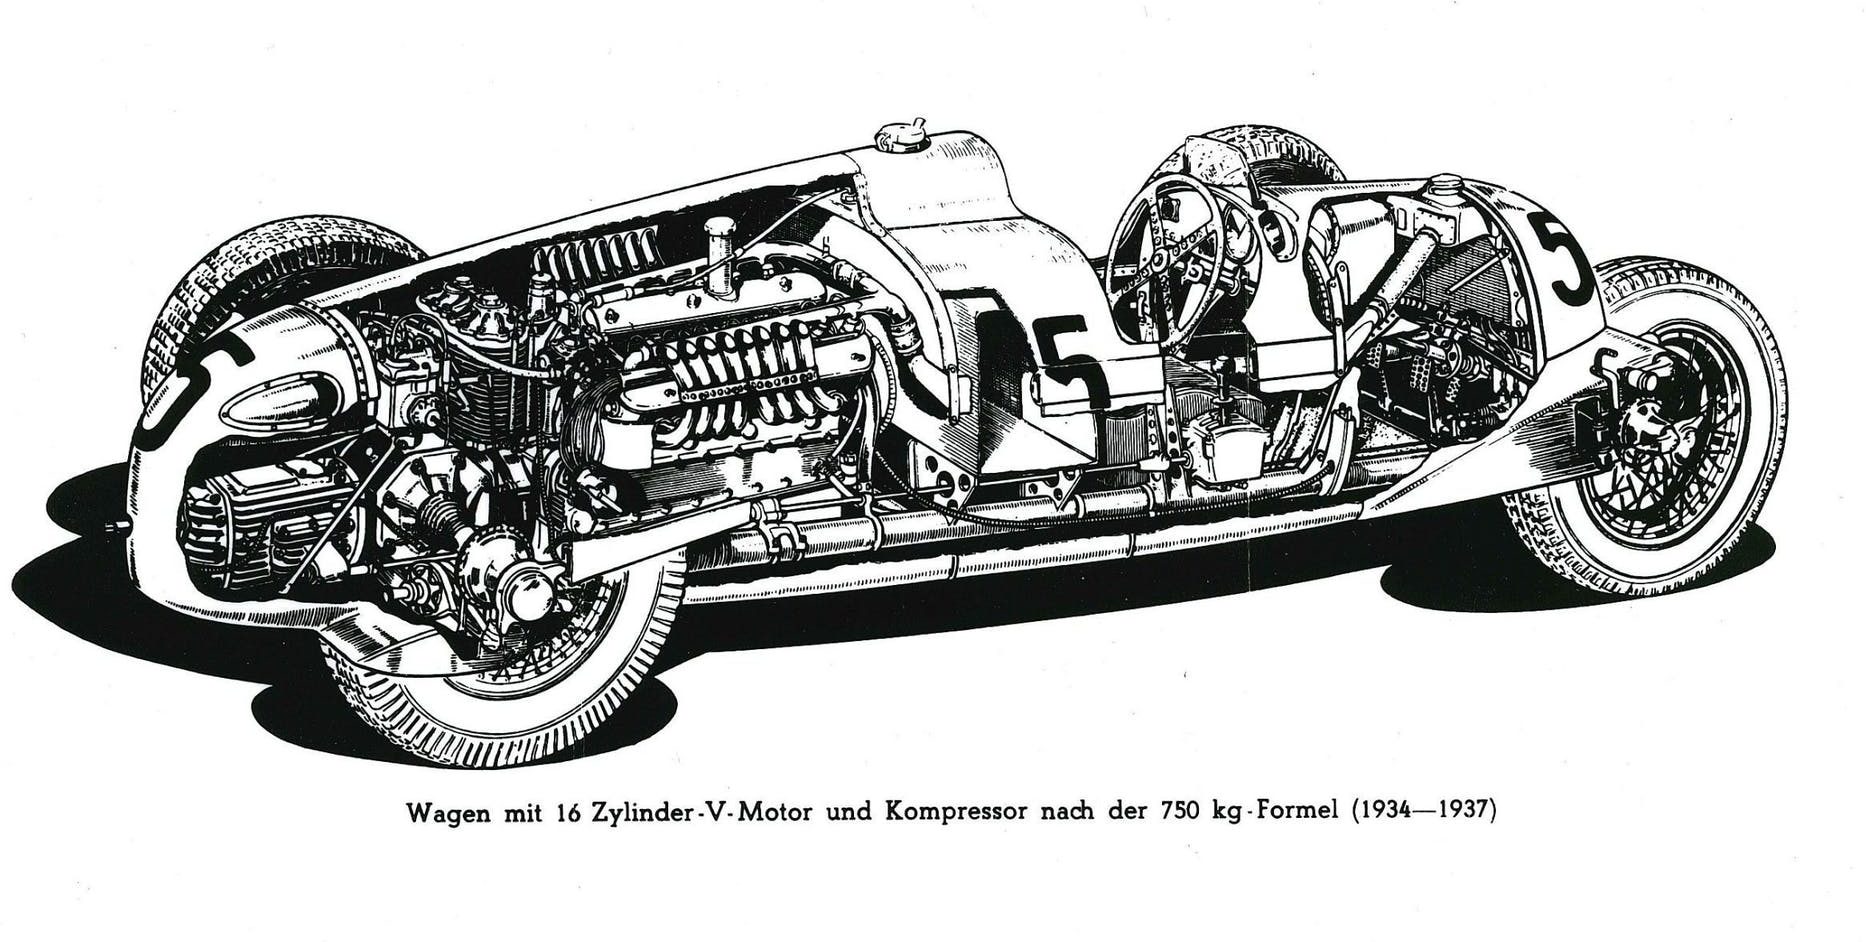 Auto Union Type C cutaway